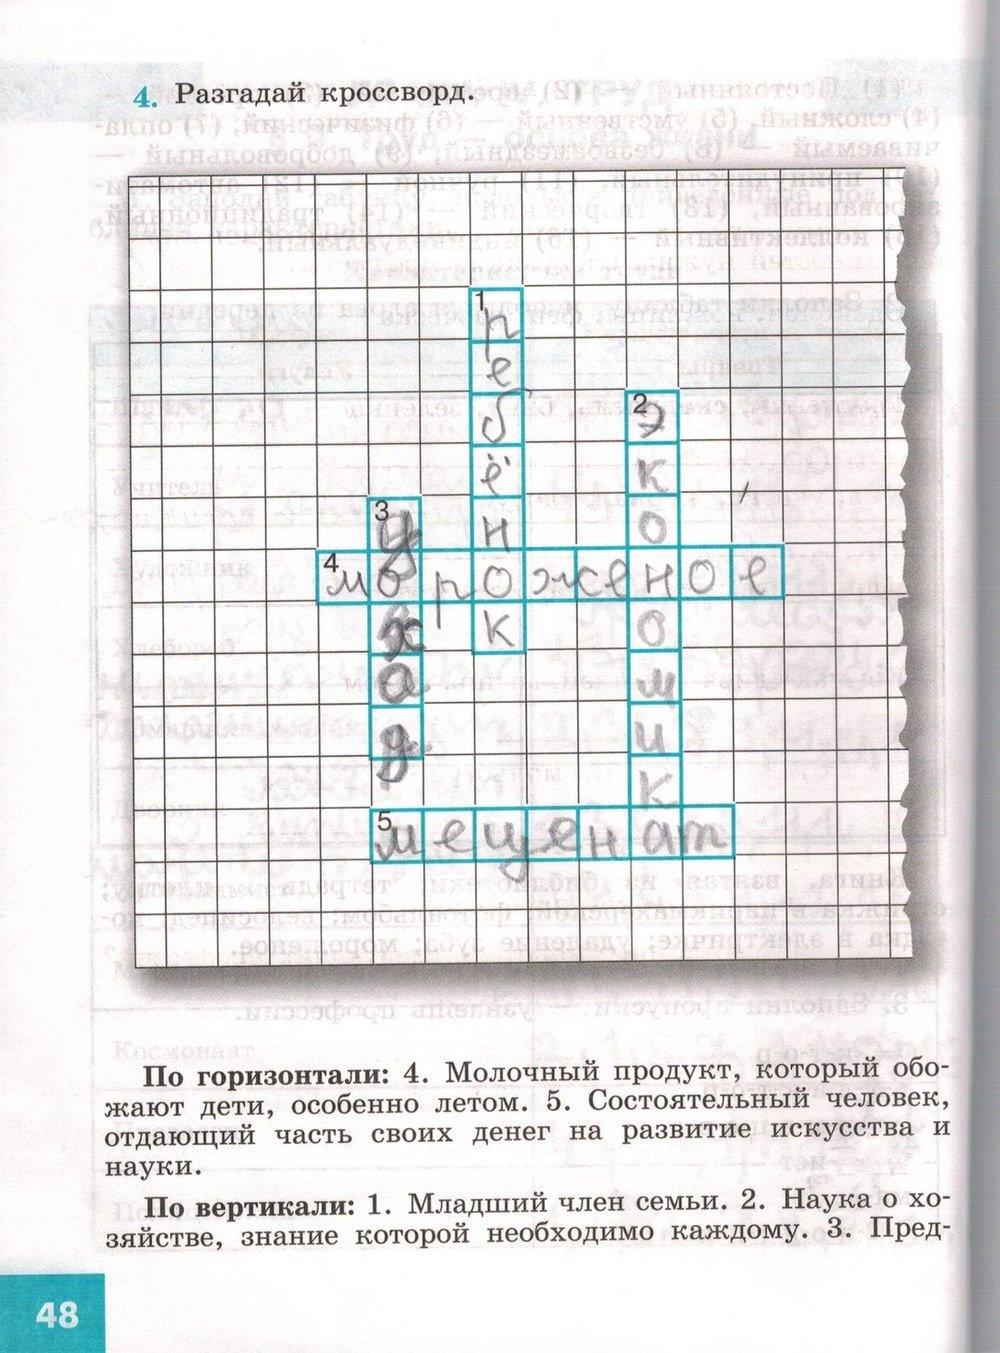 гдз 5 класс рабочая тетрадь страница 48 обществознание Иванова, Хотеенкова